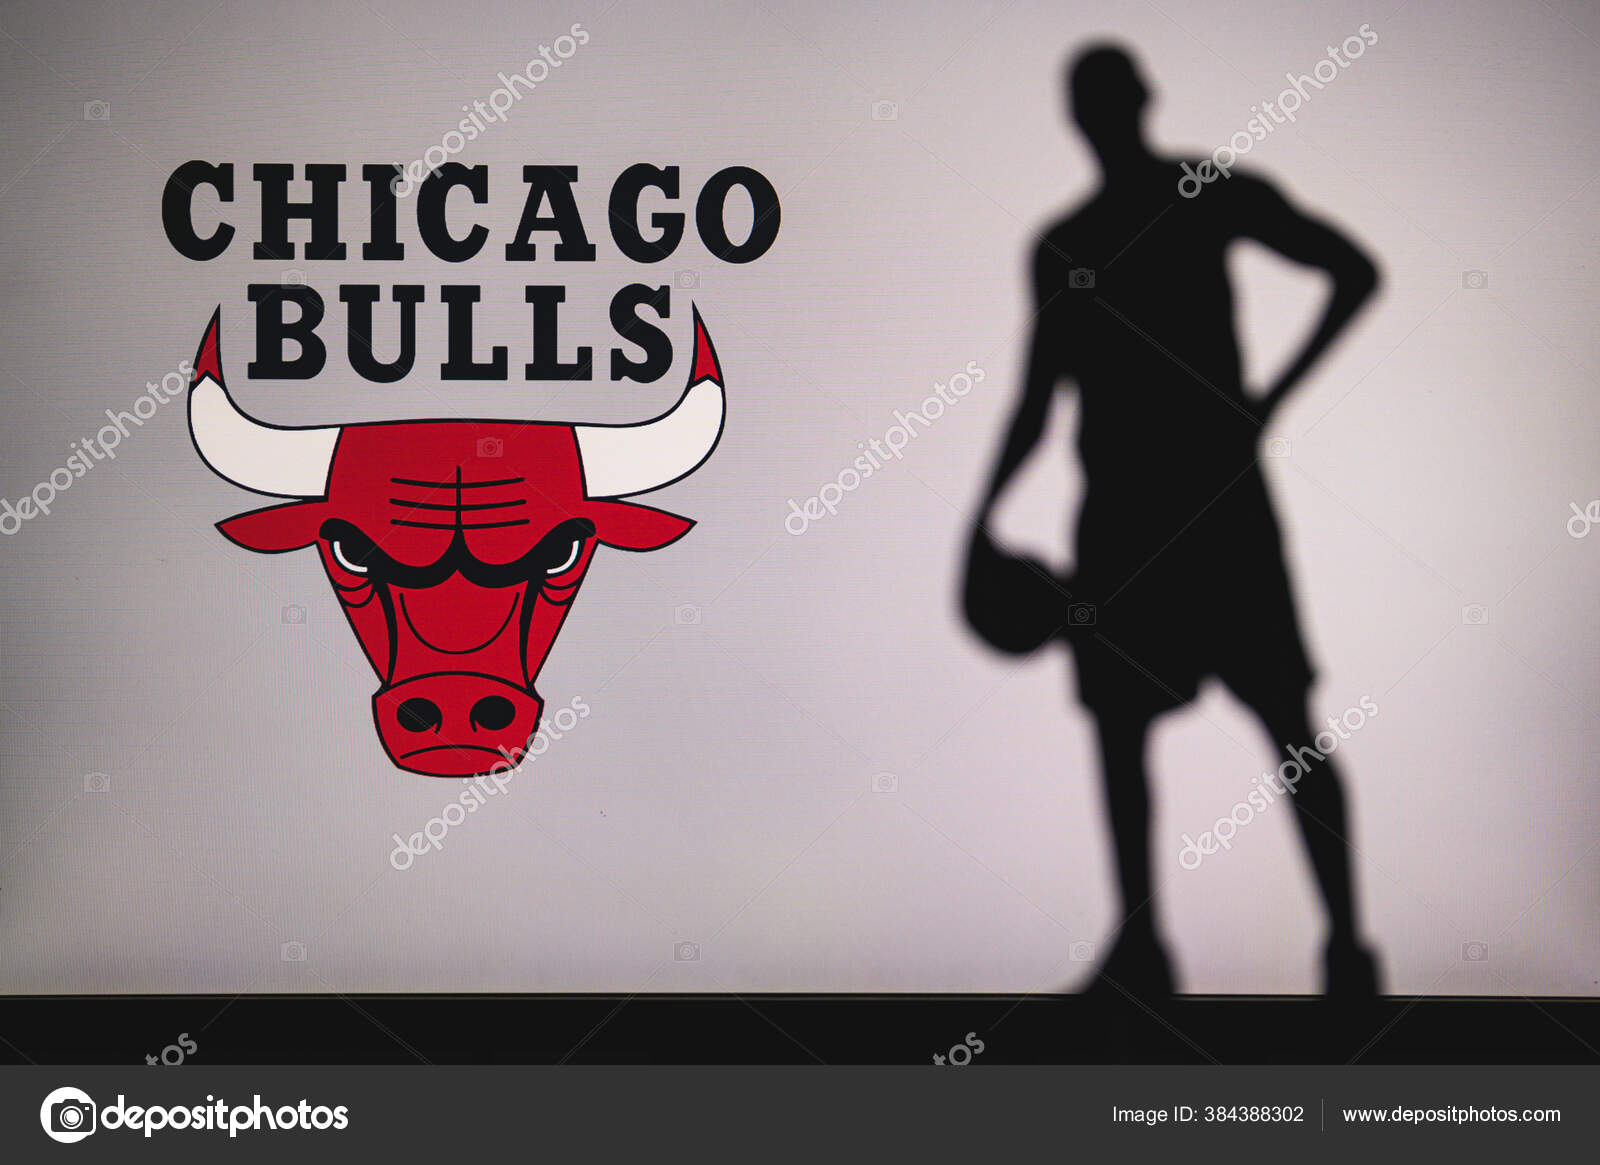 Chicago bulls logo Stock Photos, Royalty Free Chicago bulls logo Images |  Depositphotos